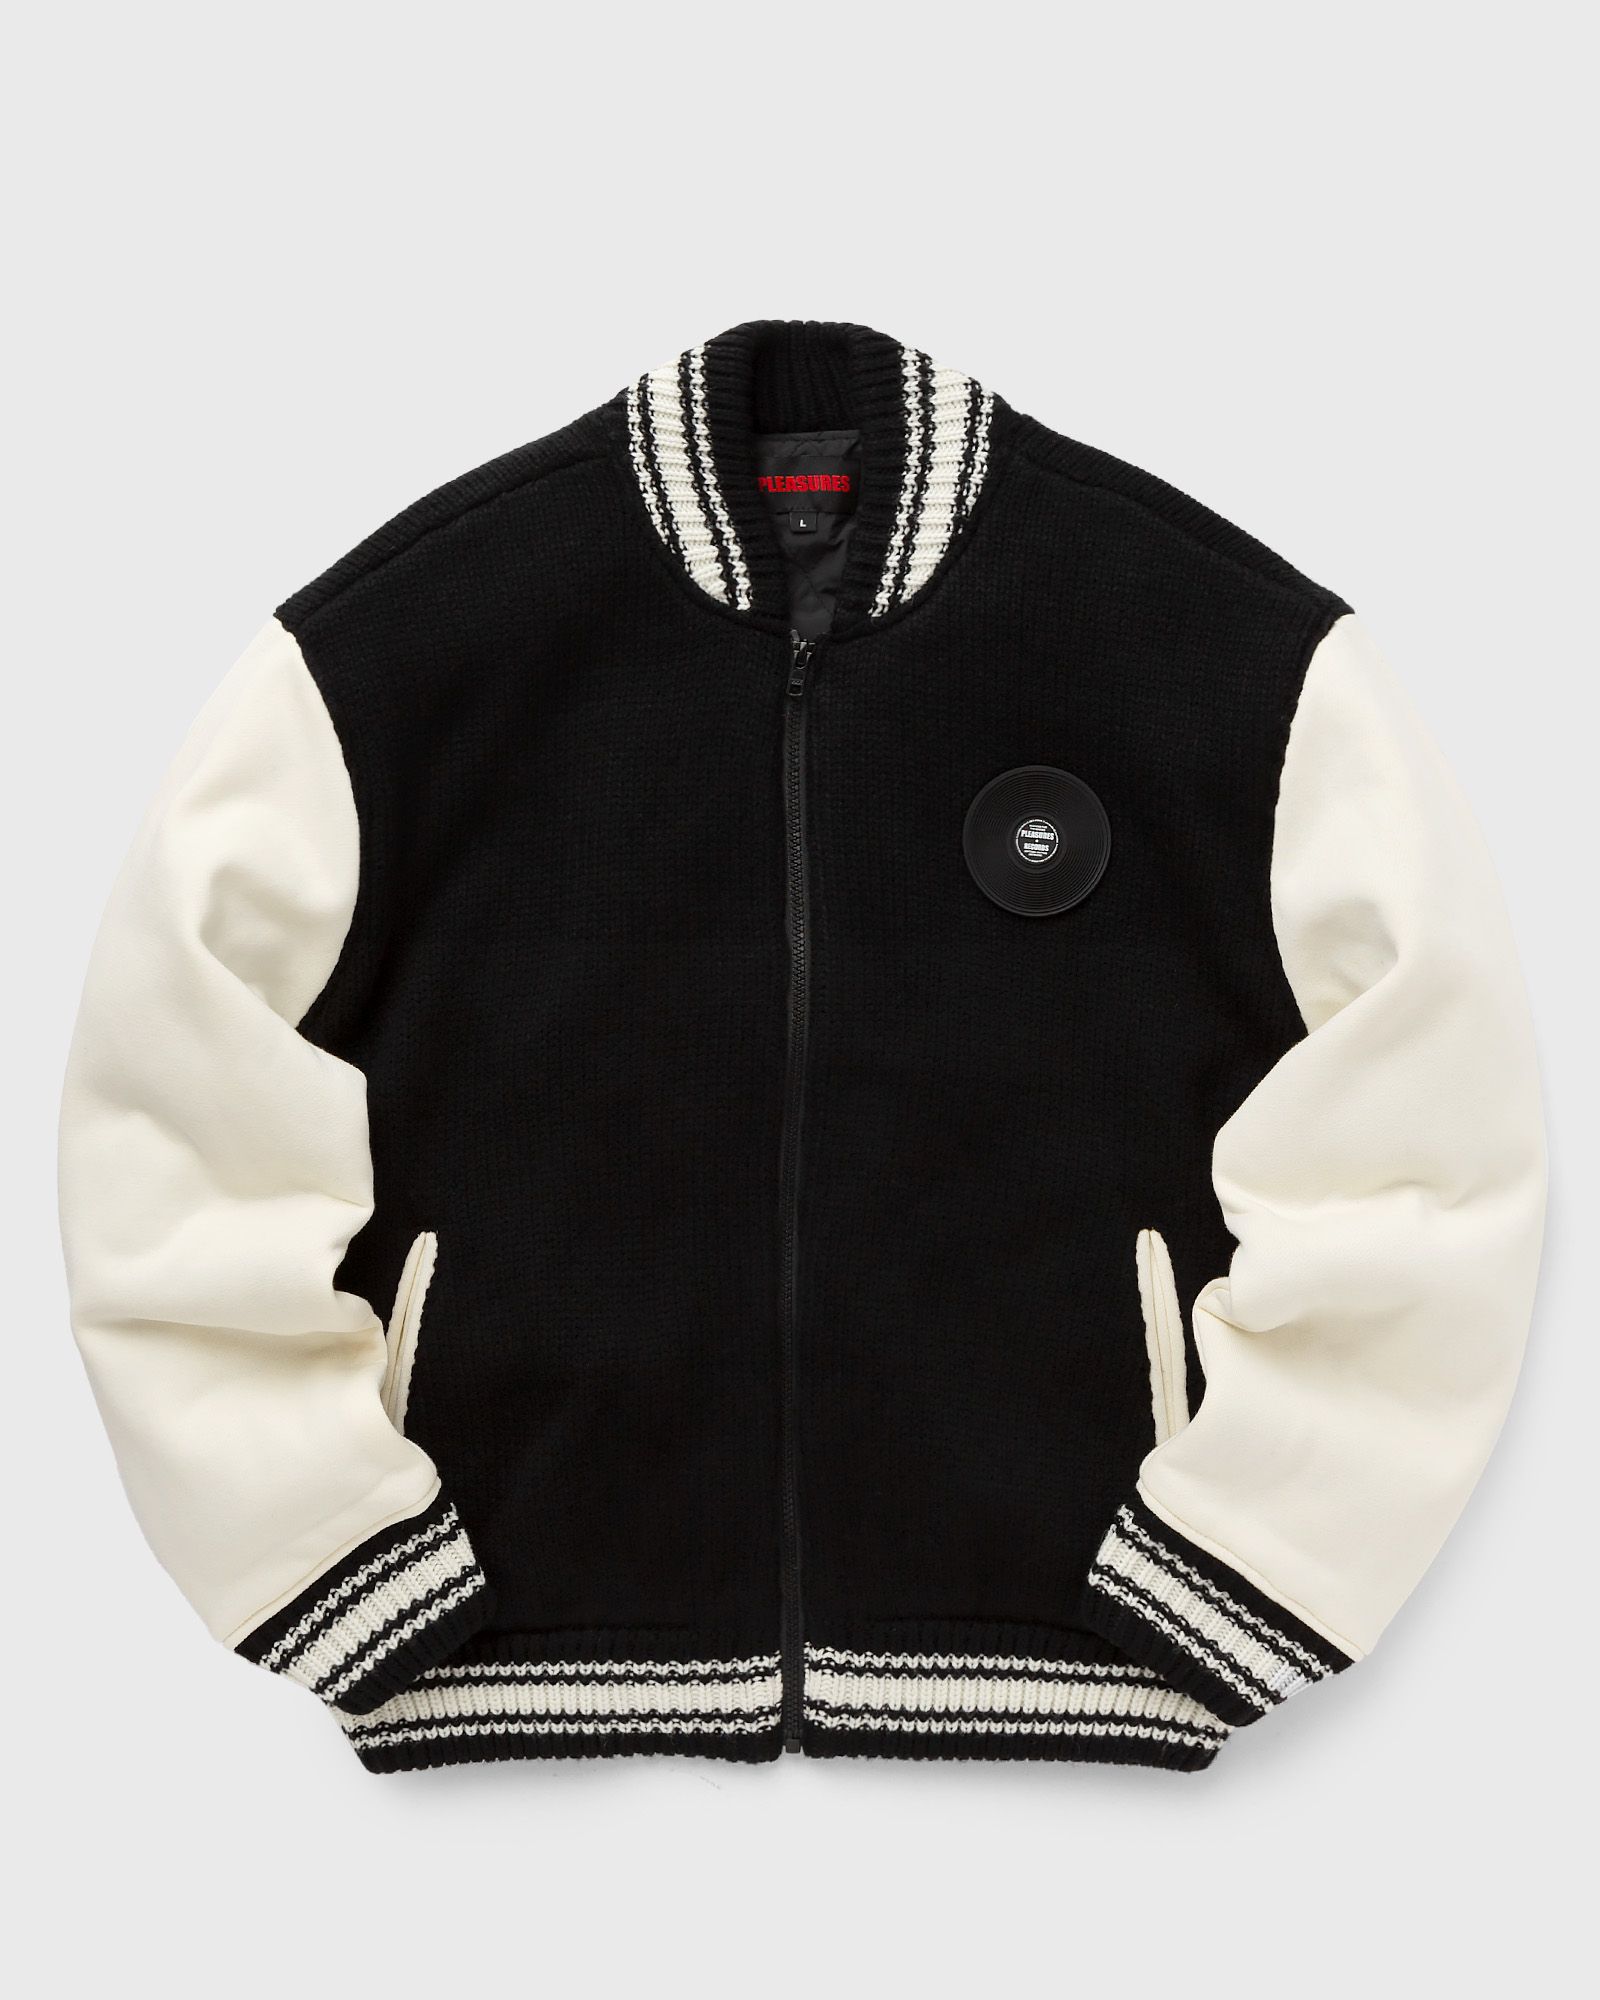 Pleasures - smoke knitted varsity jacket men bomber jackets|college jackets black|white in größe:m